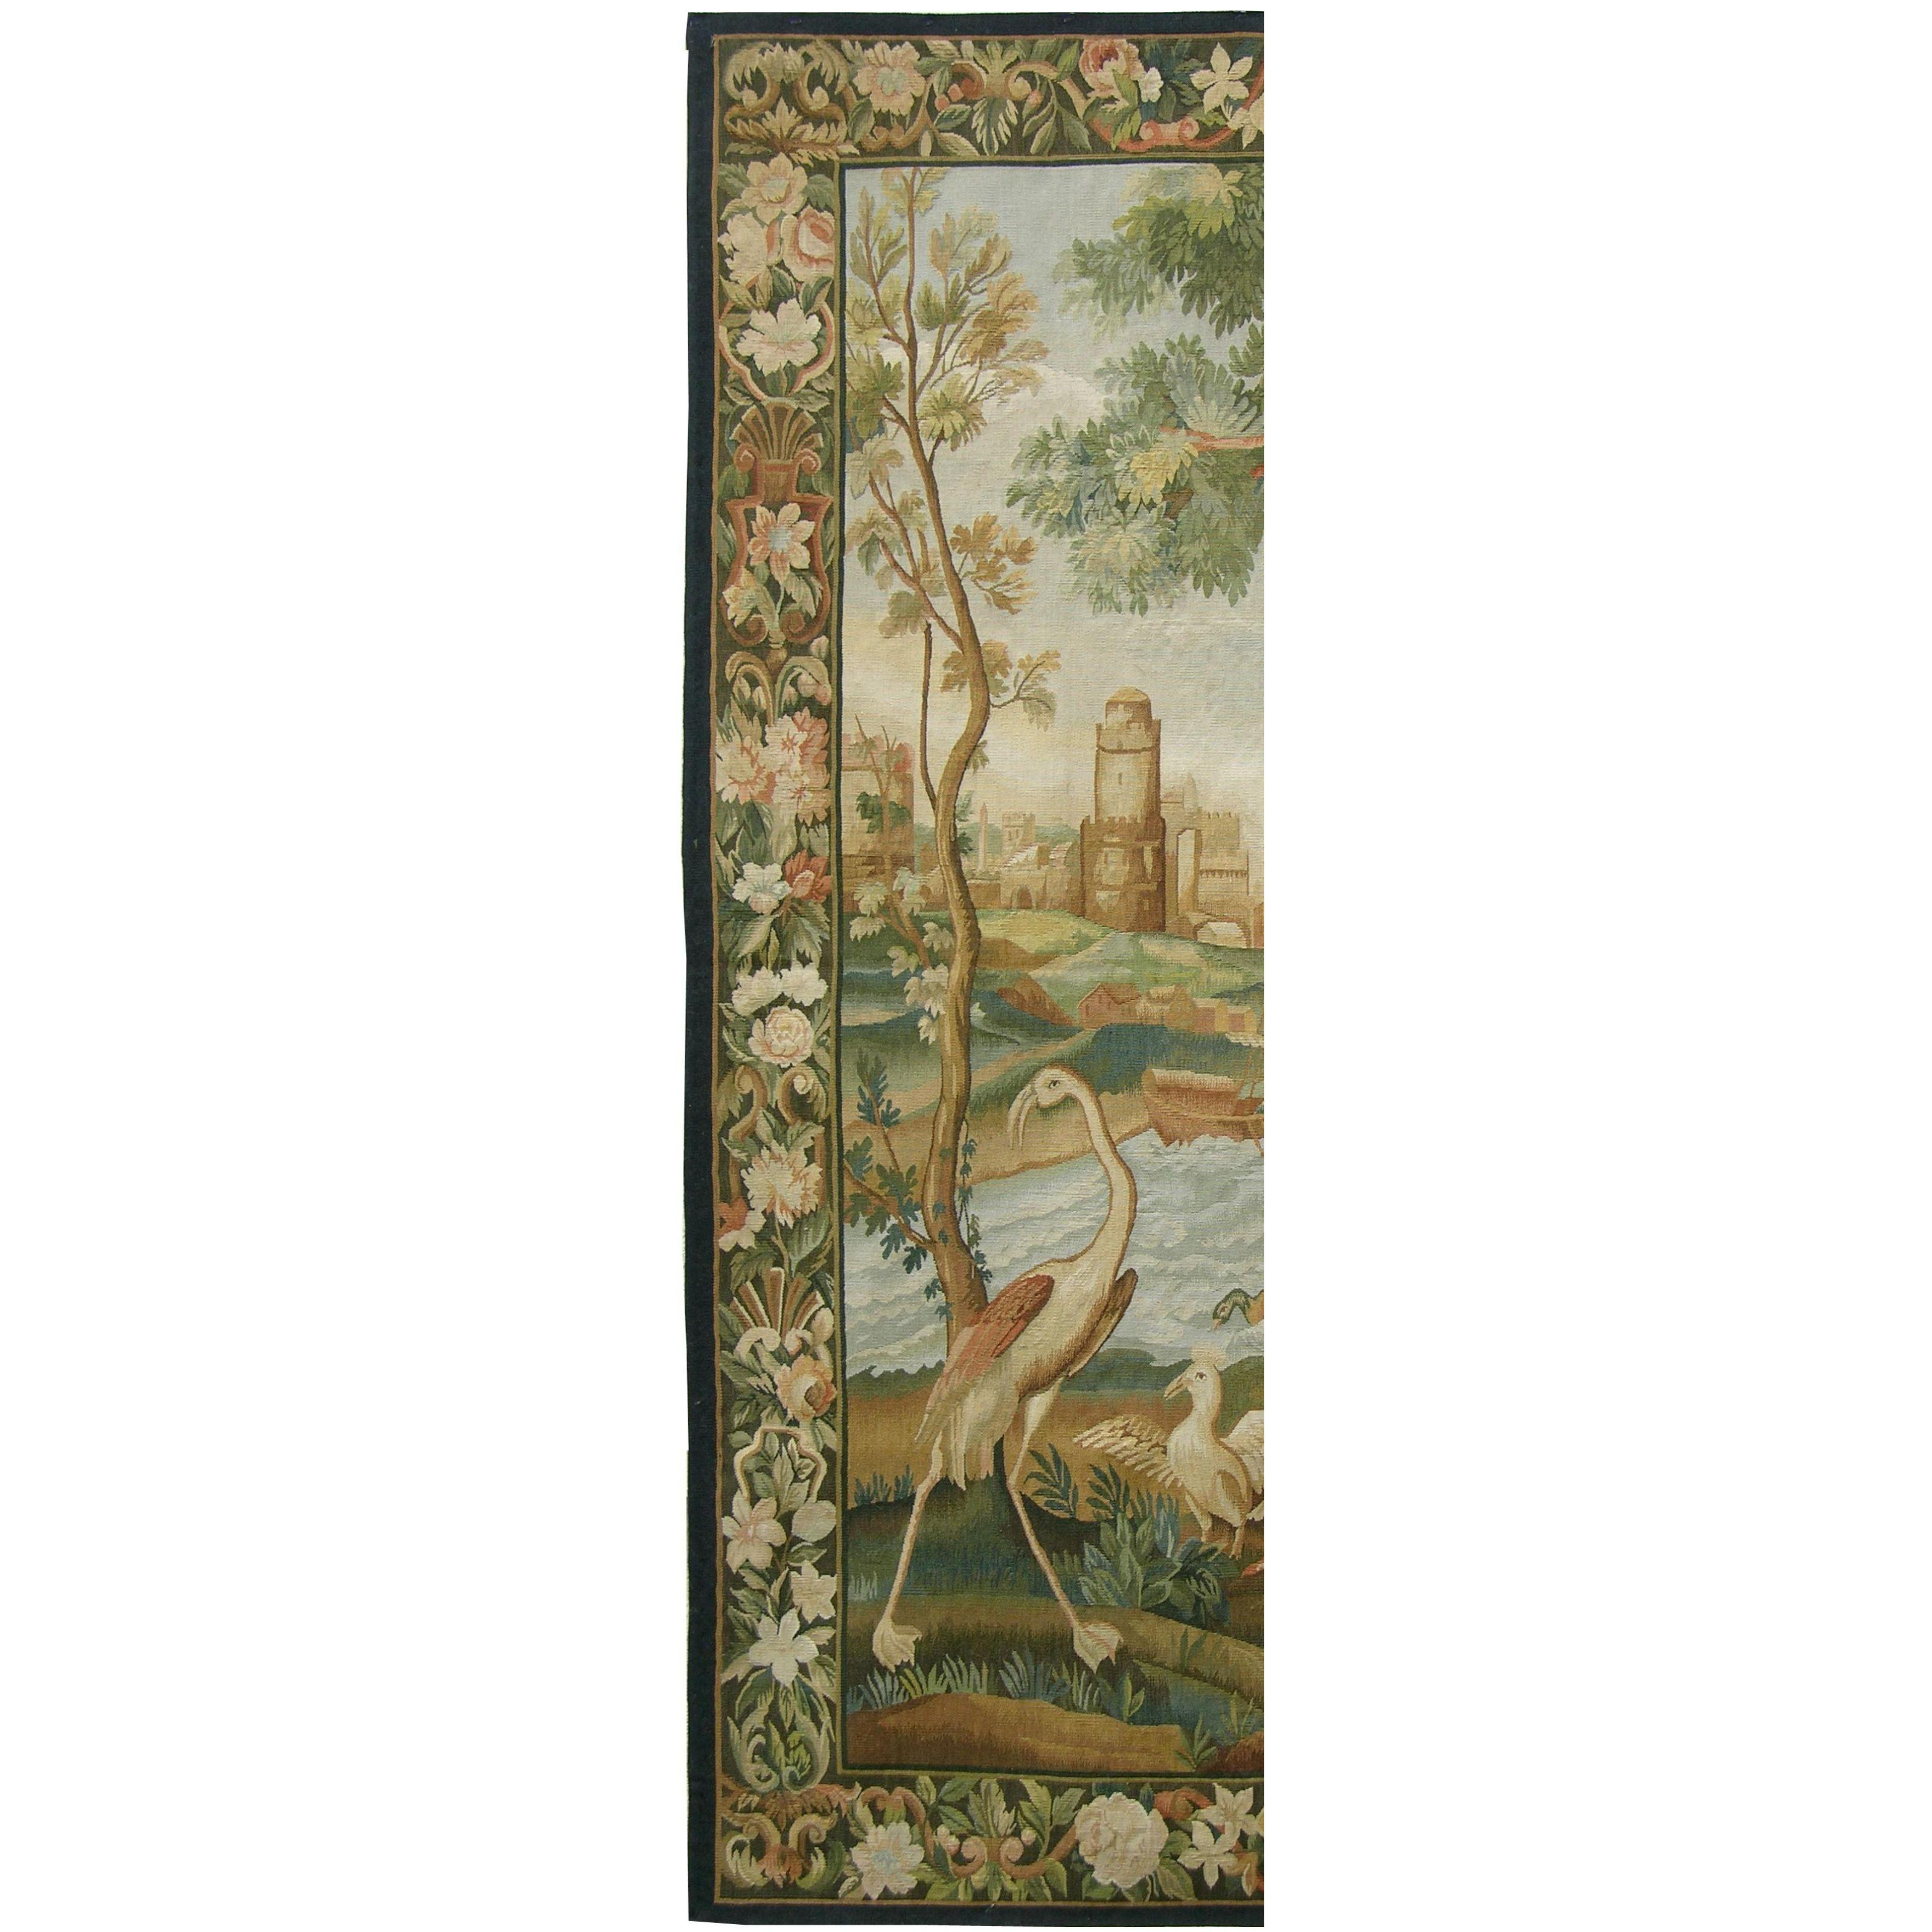 Other Vintage Tapestry Depicting Wildlife 6'2